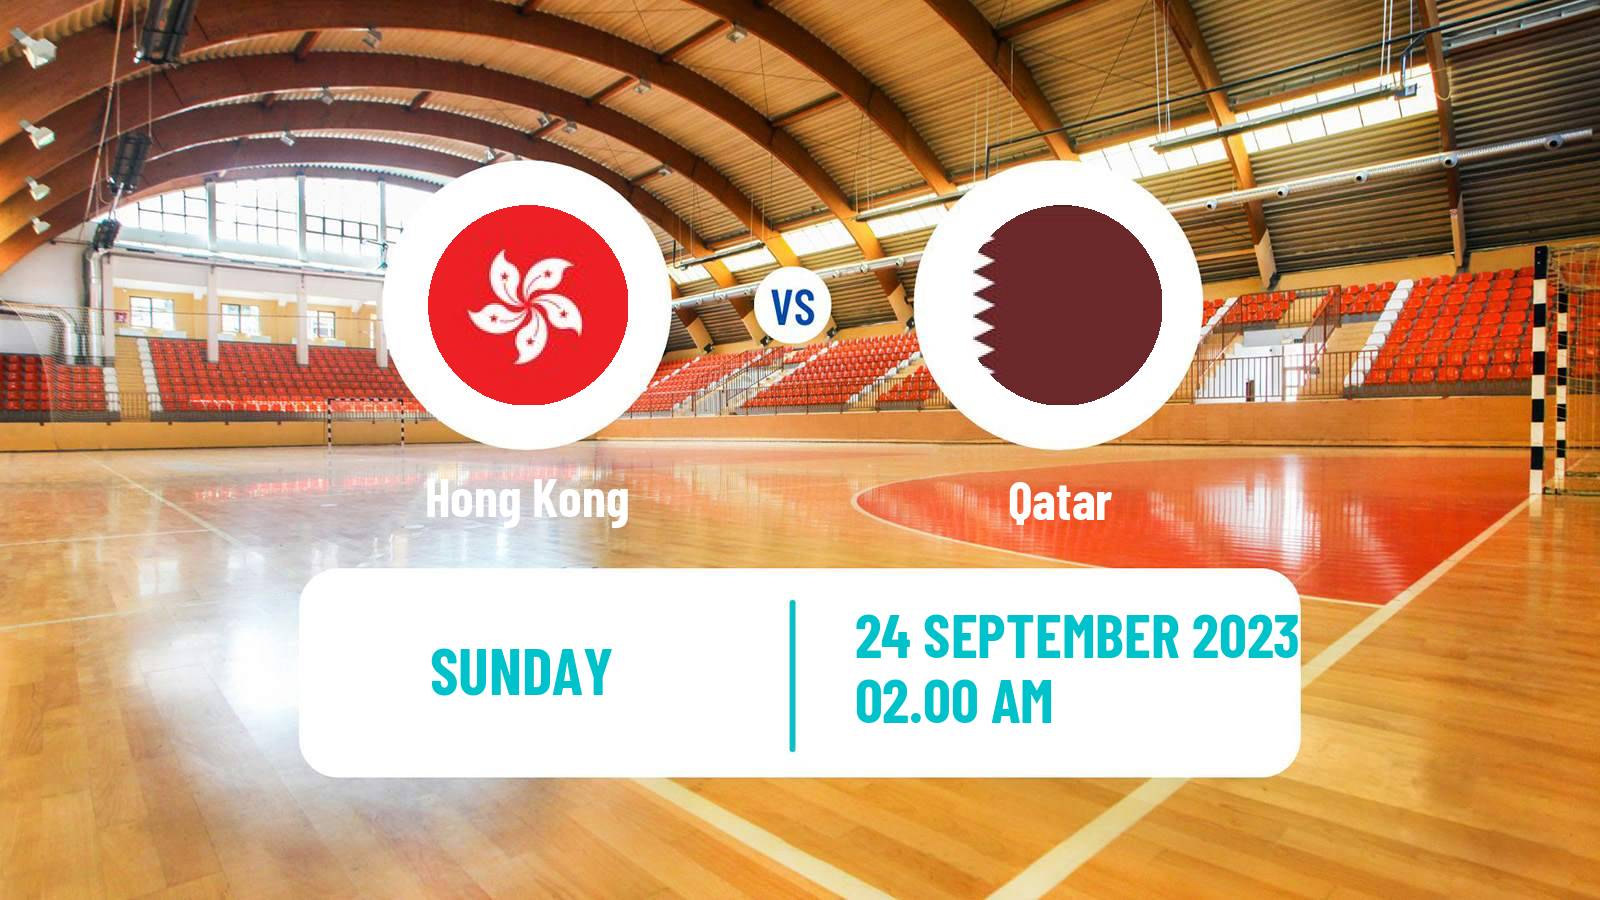 Handball Asian Games Handball Hong Kong - Qatar